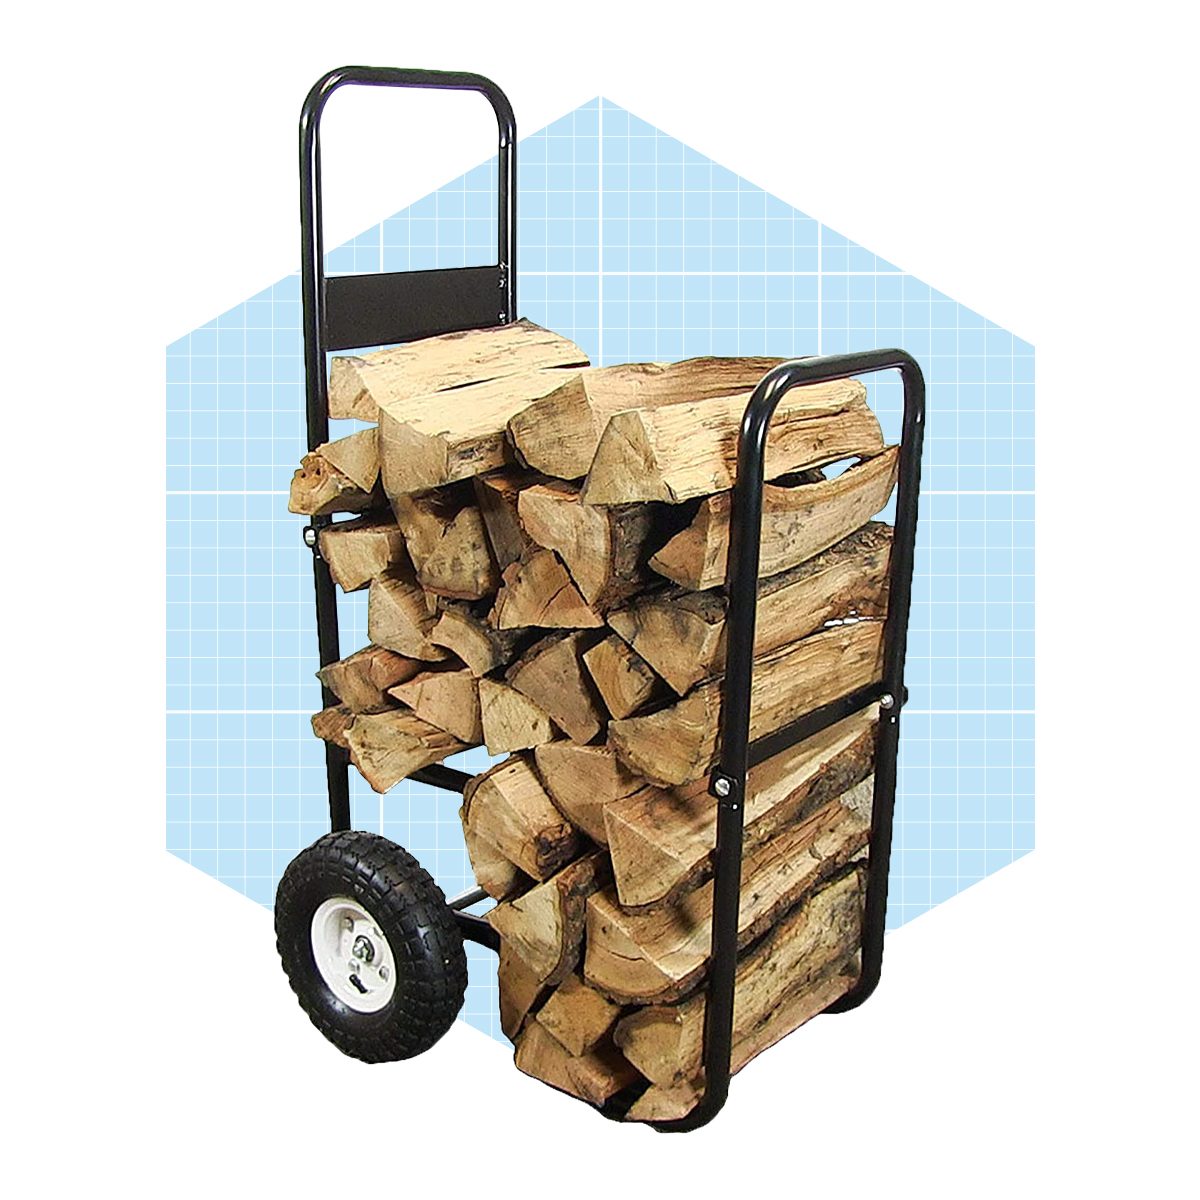 Sunnydaze Firewood Log Cart Carrier Ecomm Amazon.com